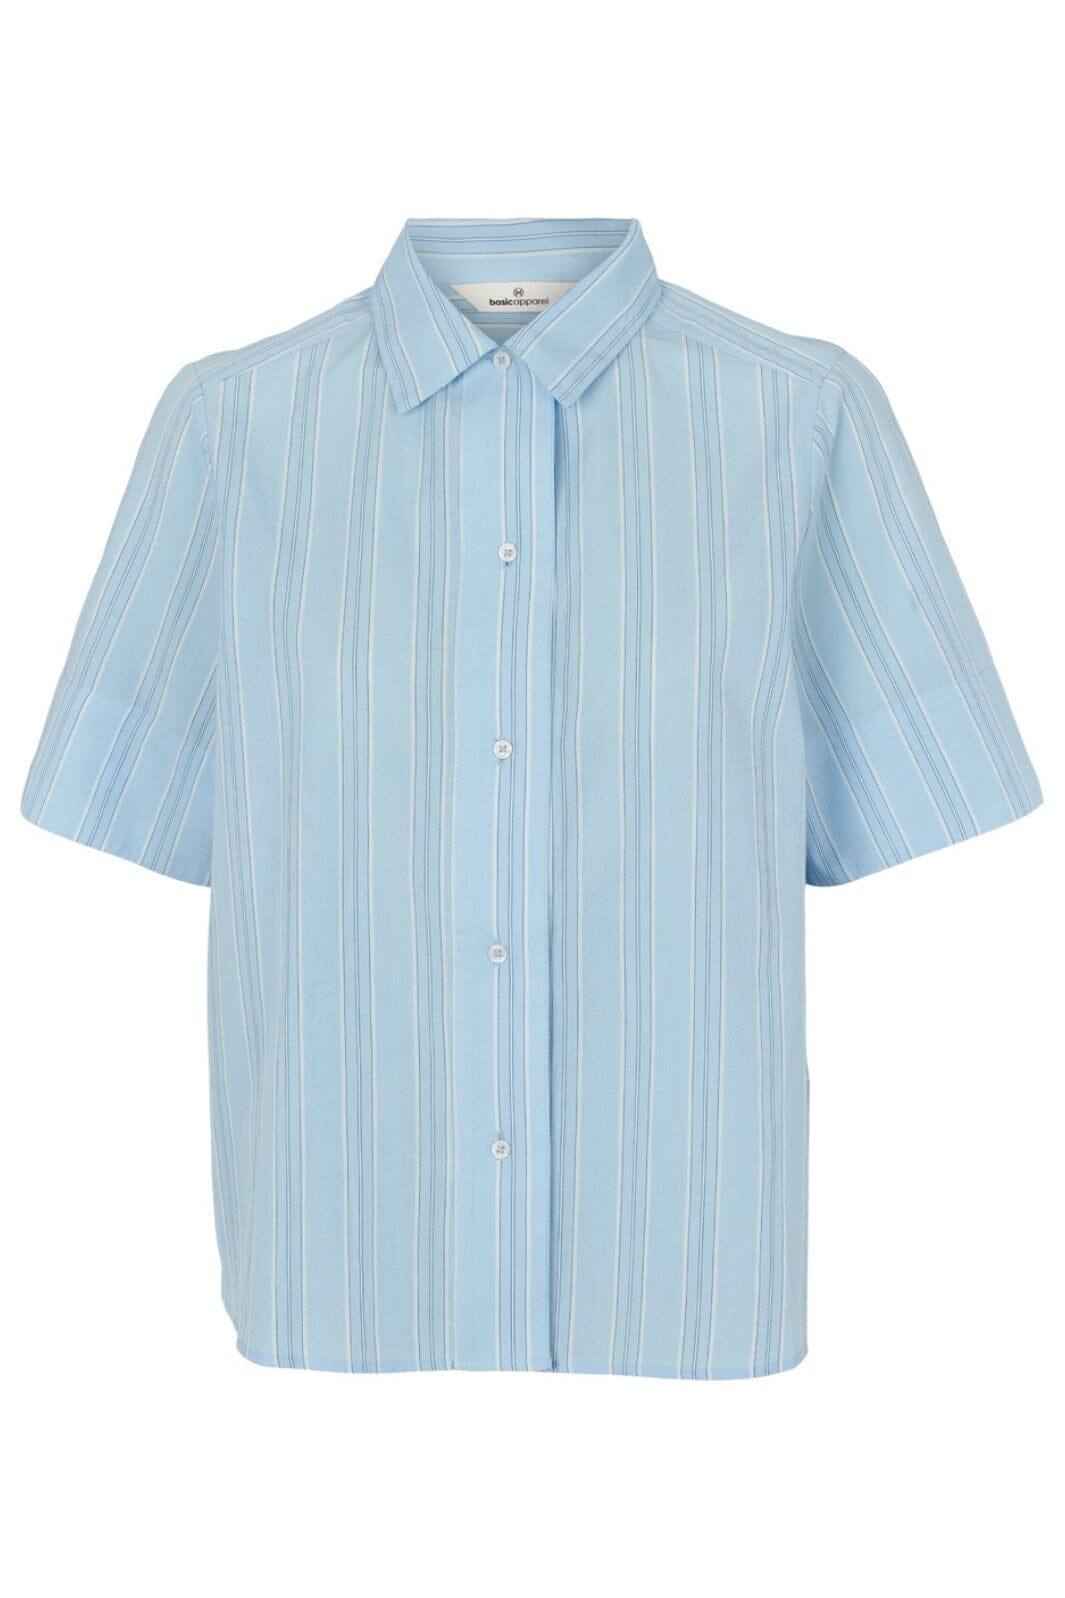 Basic Apparel - Marina Ss Shirt - 679 Airy Blue / Lotus / Birch / Classic Blue Skjorter 